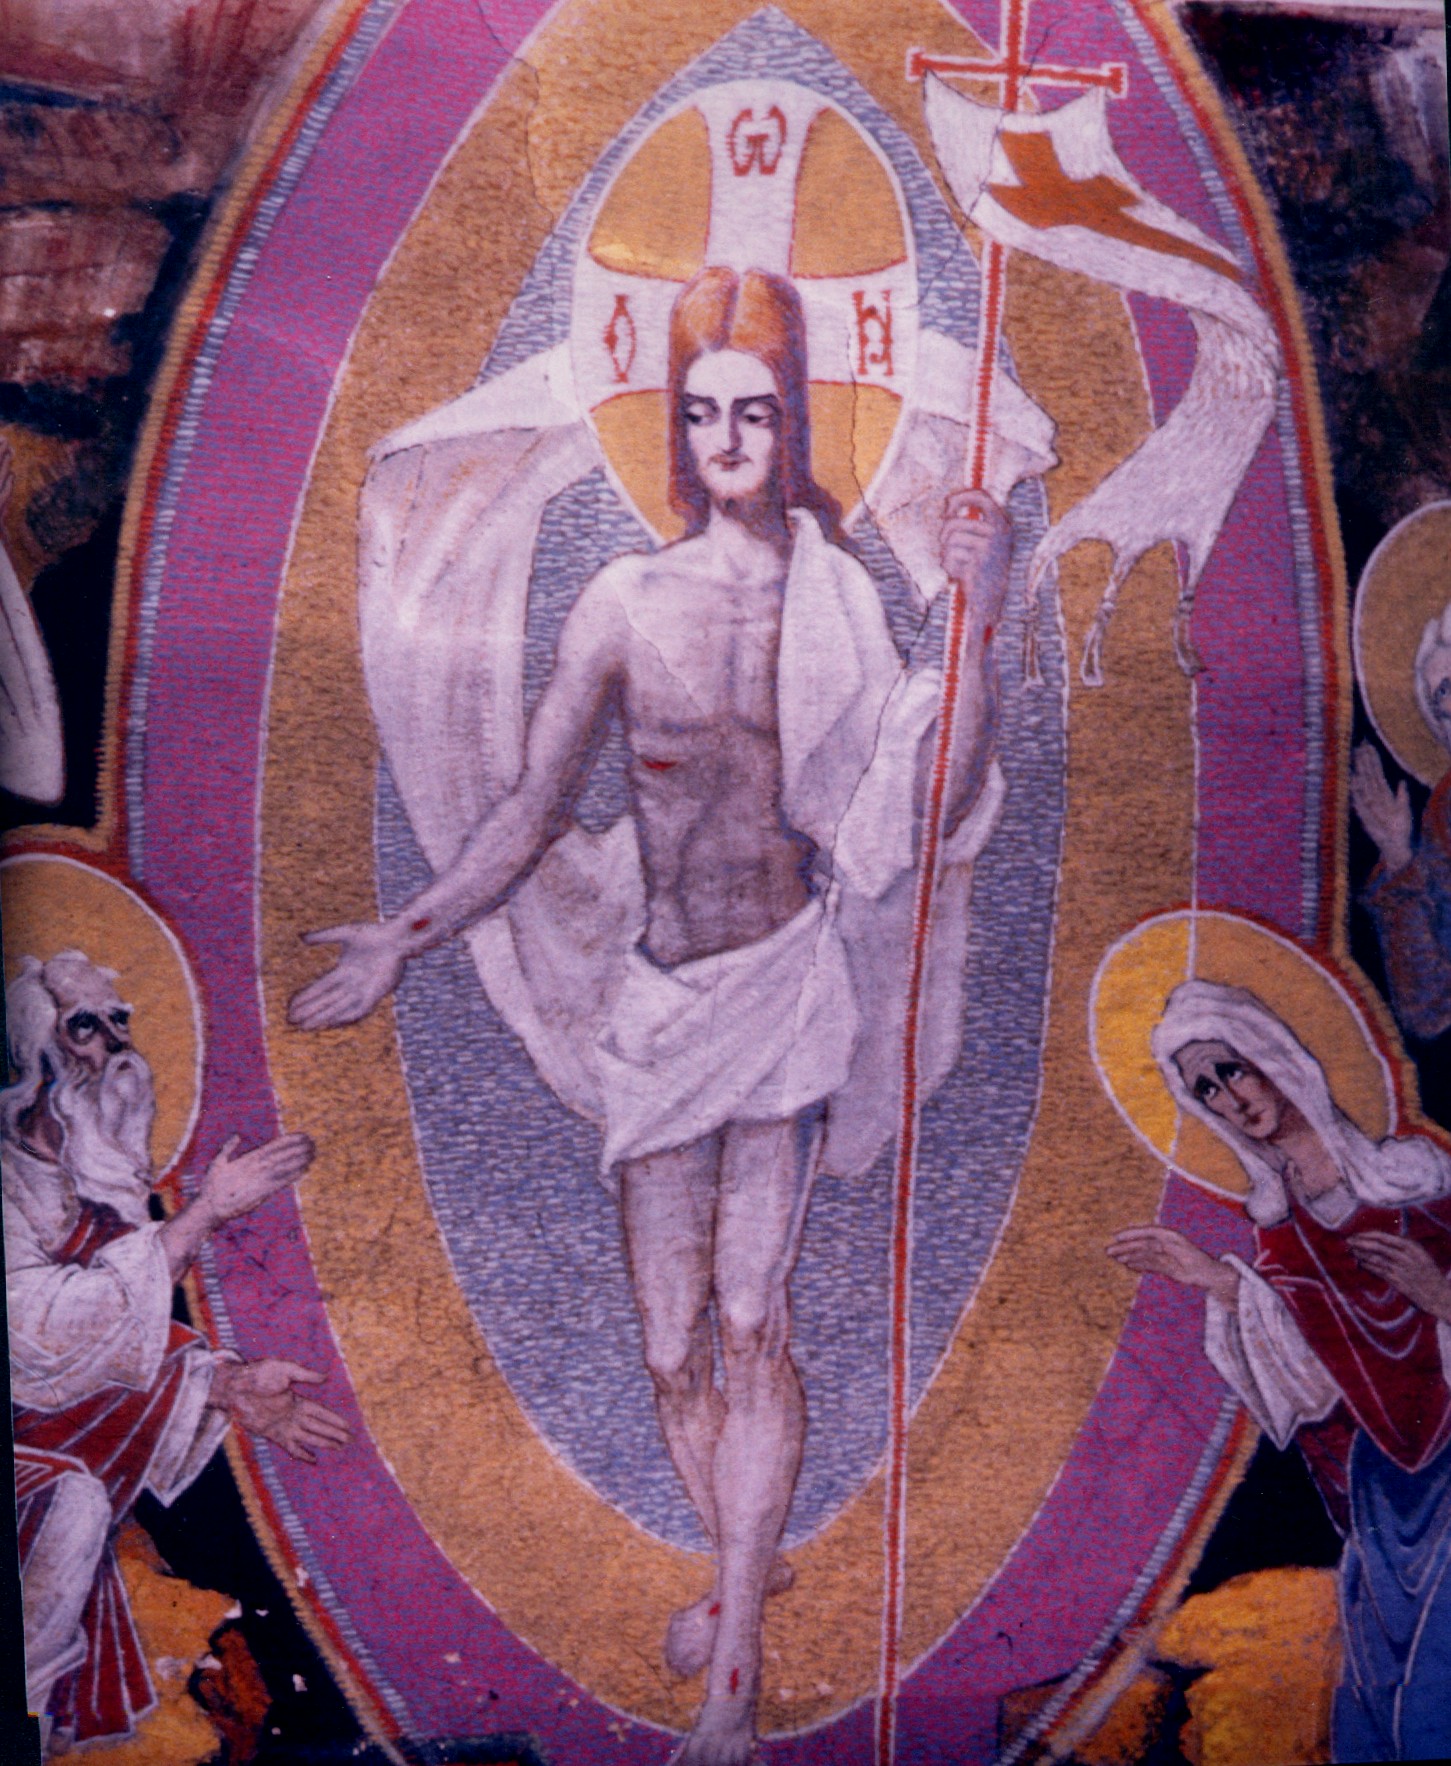 Parintele Arsenie Boca - pictorul de la Biserica Draganescu